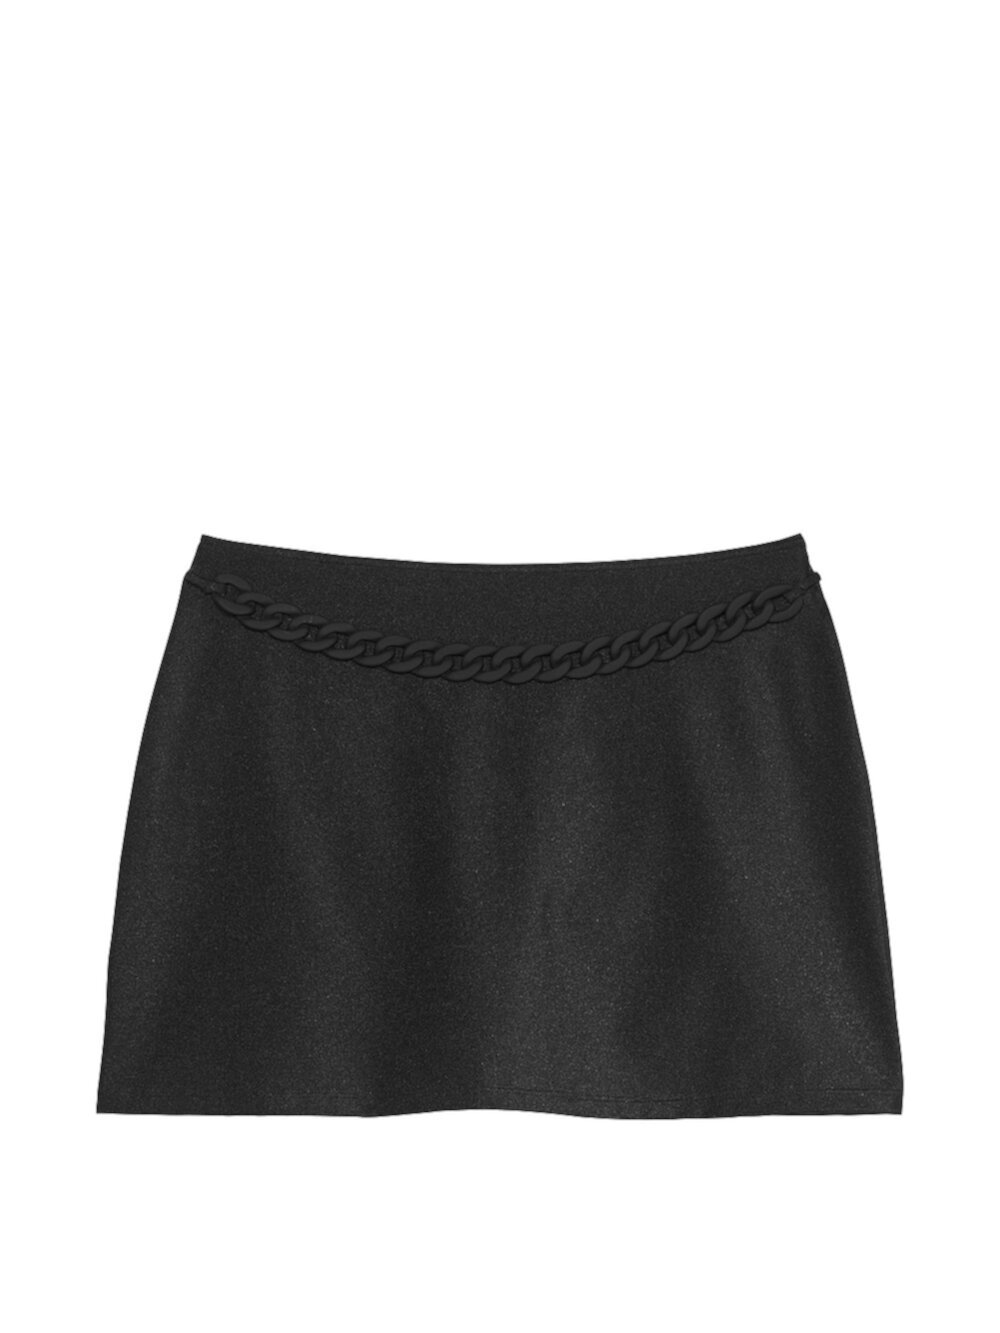 New Style! Chain-Link Mini Cover-Up Skirt Victoria's Secret Swim